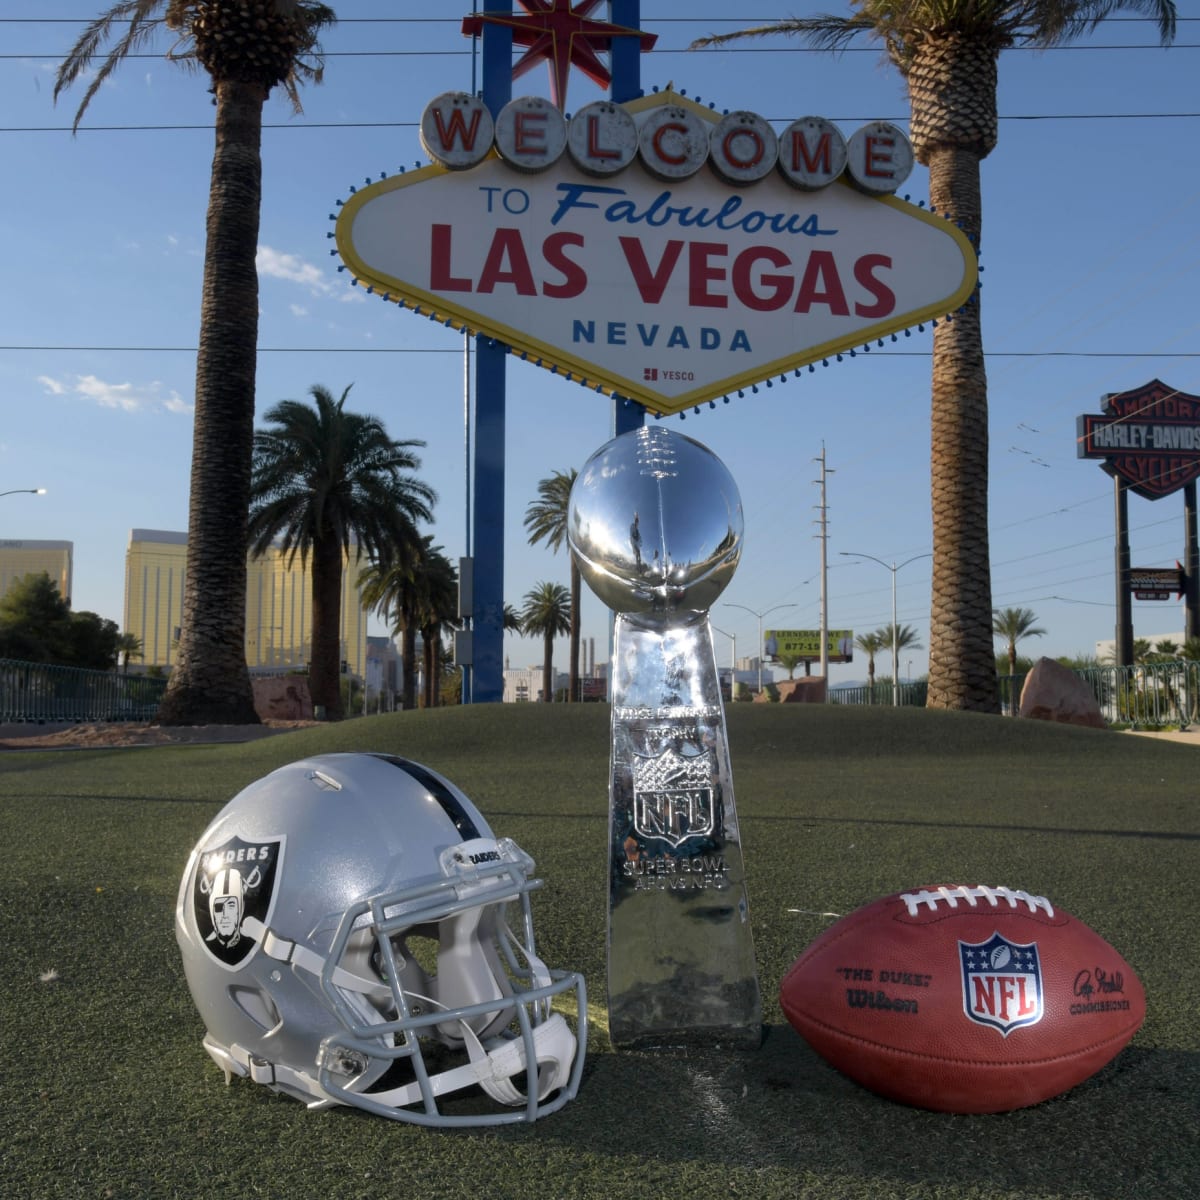 If Raiders win Super Bowl, sportsbooks face 'massive liability